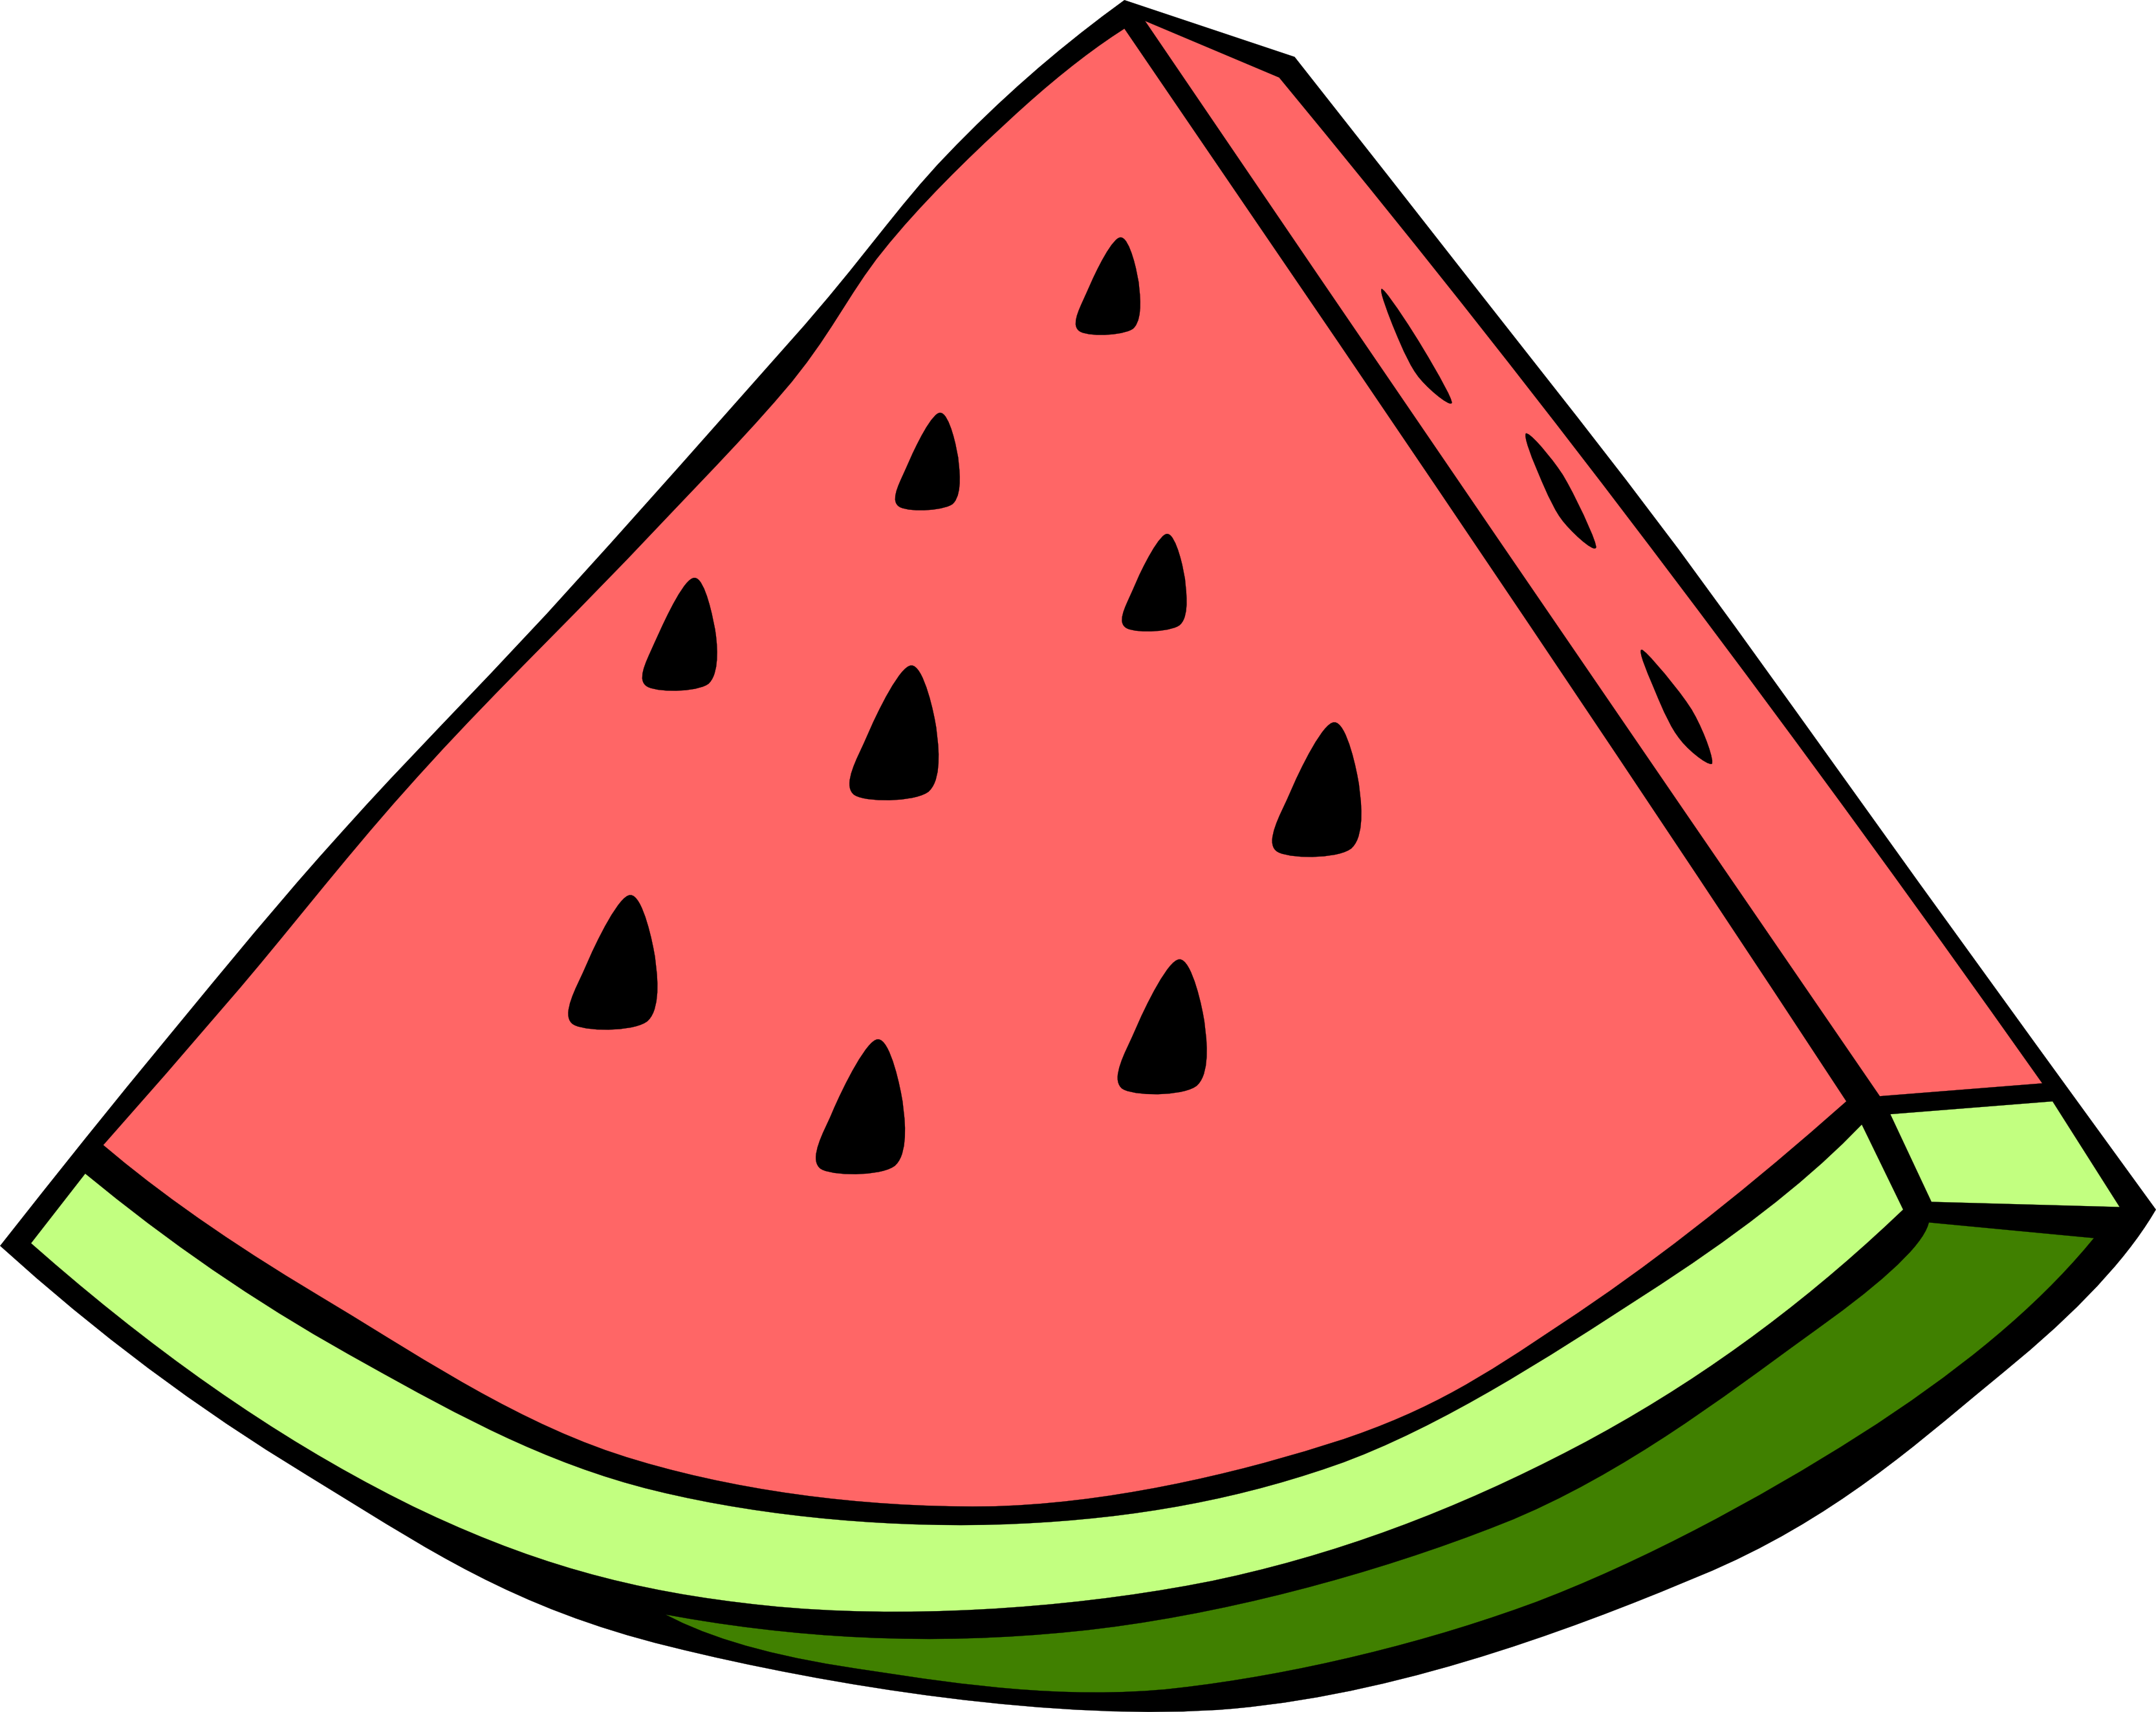 watermelon clipart hello summer